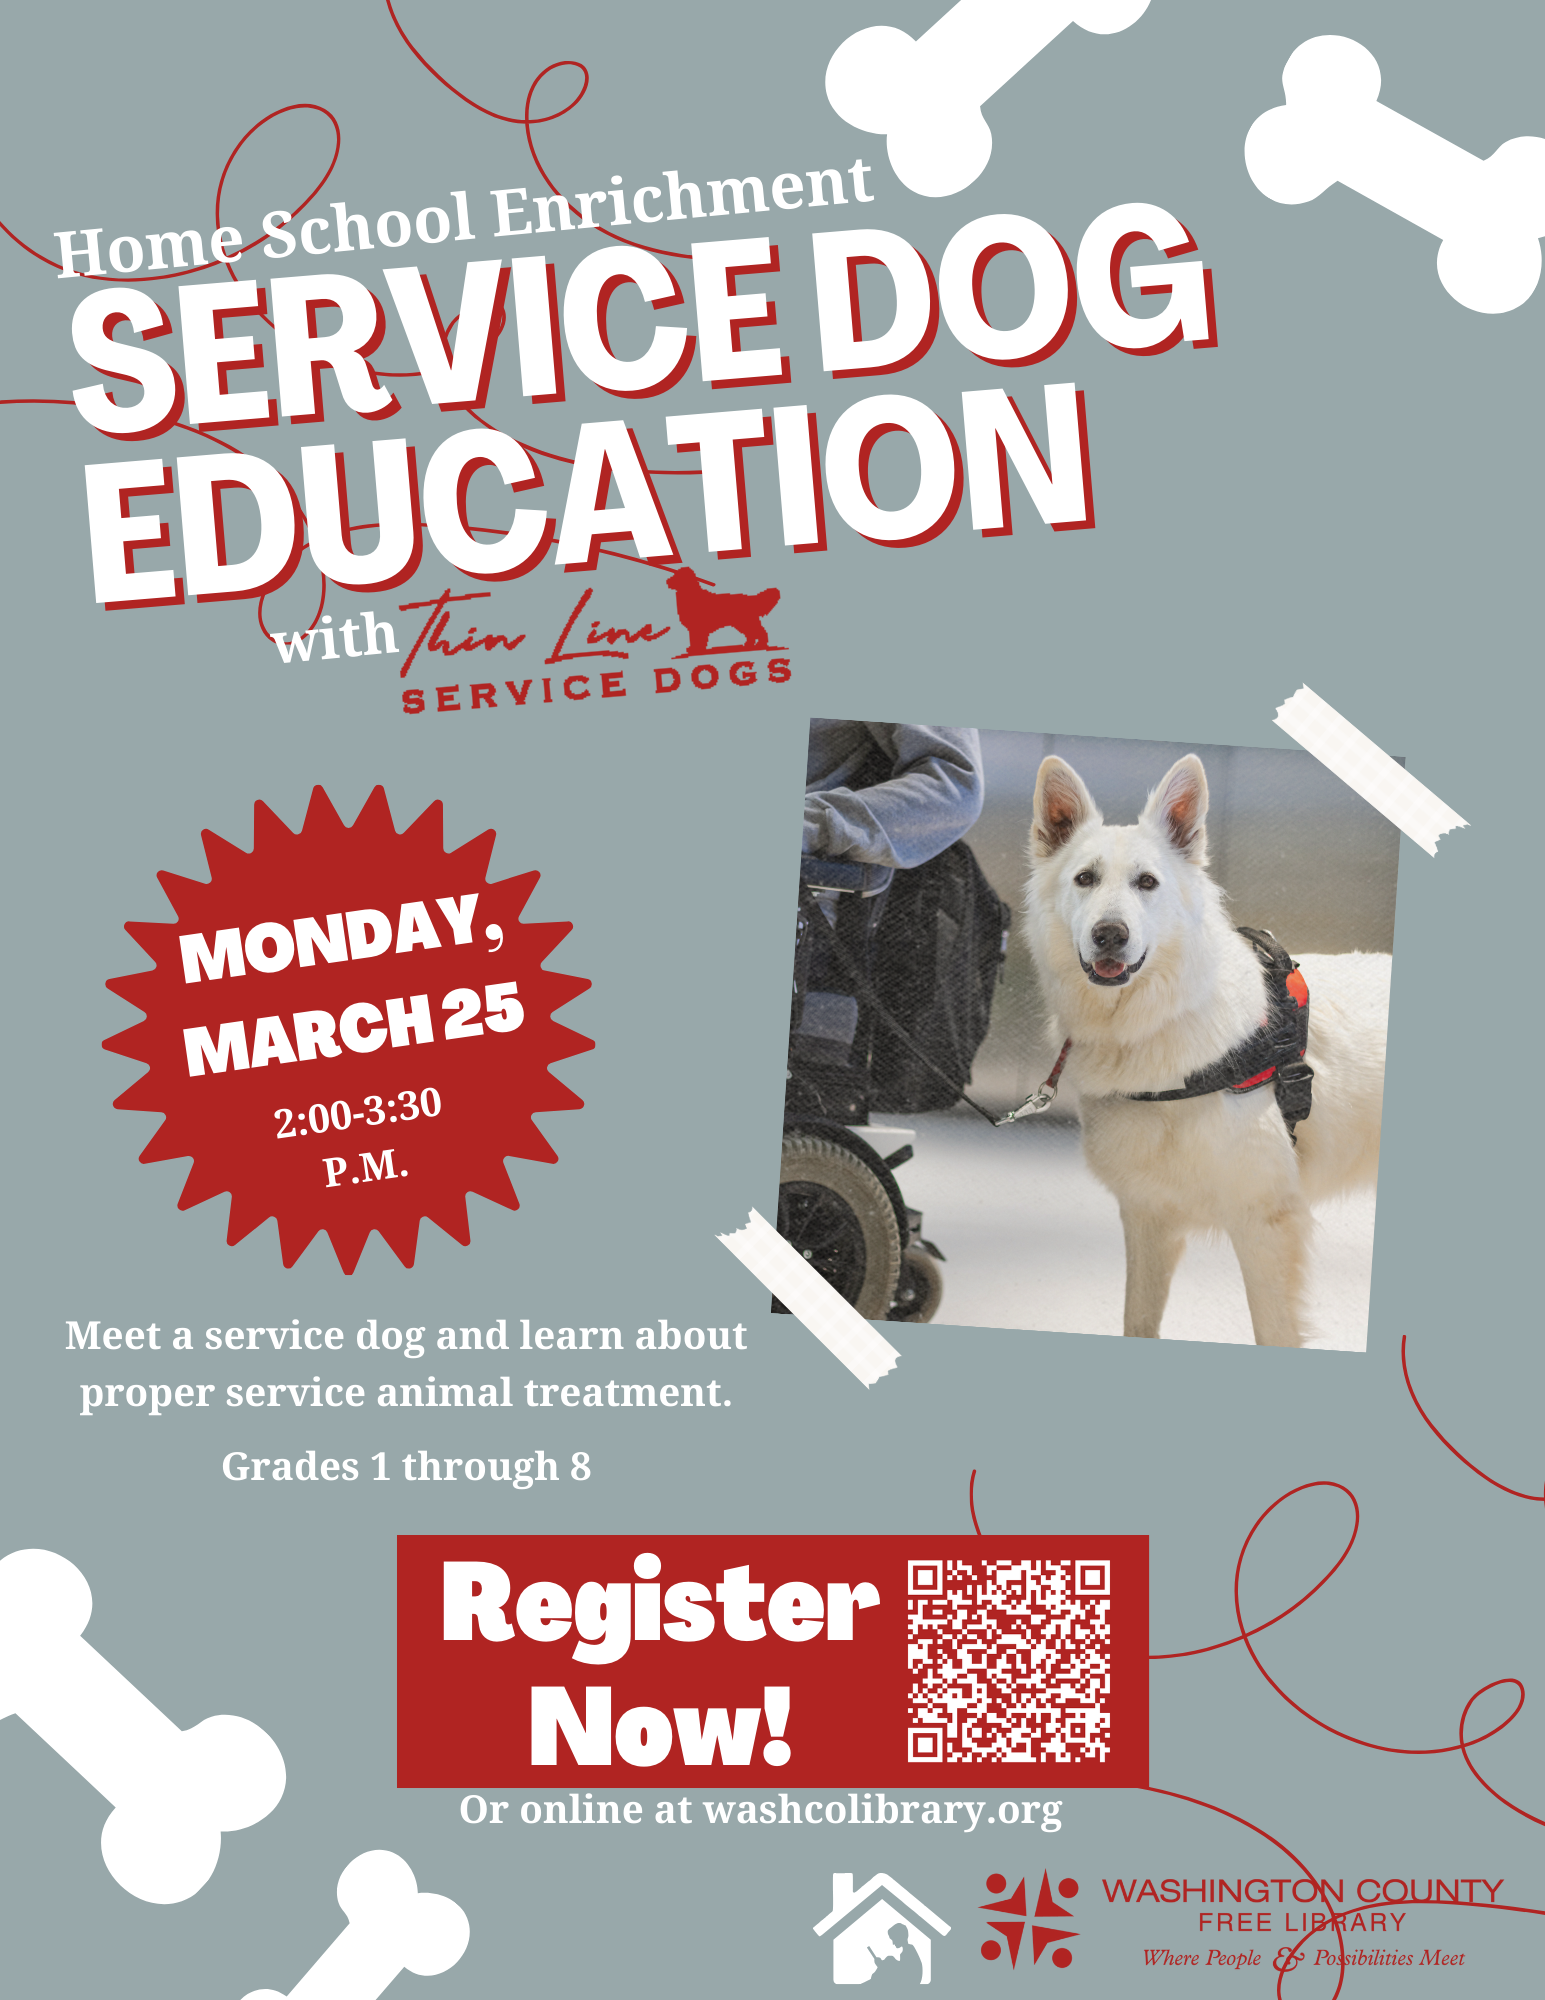 Home School Enrichment Service Dog Education. March 25 at 2:00 p.m. 